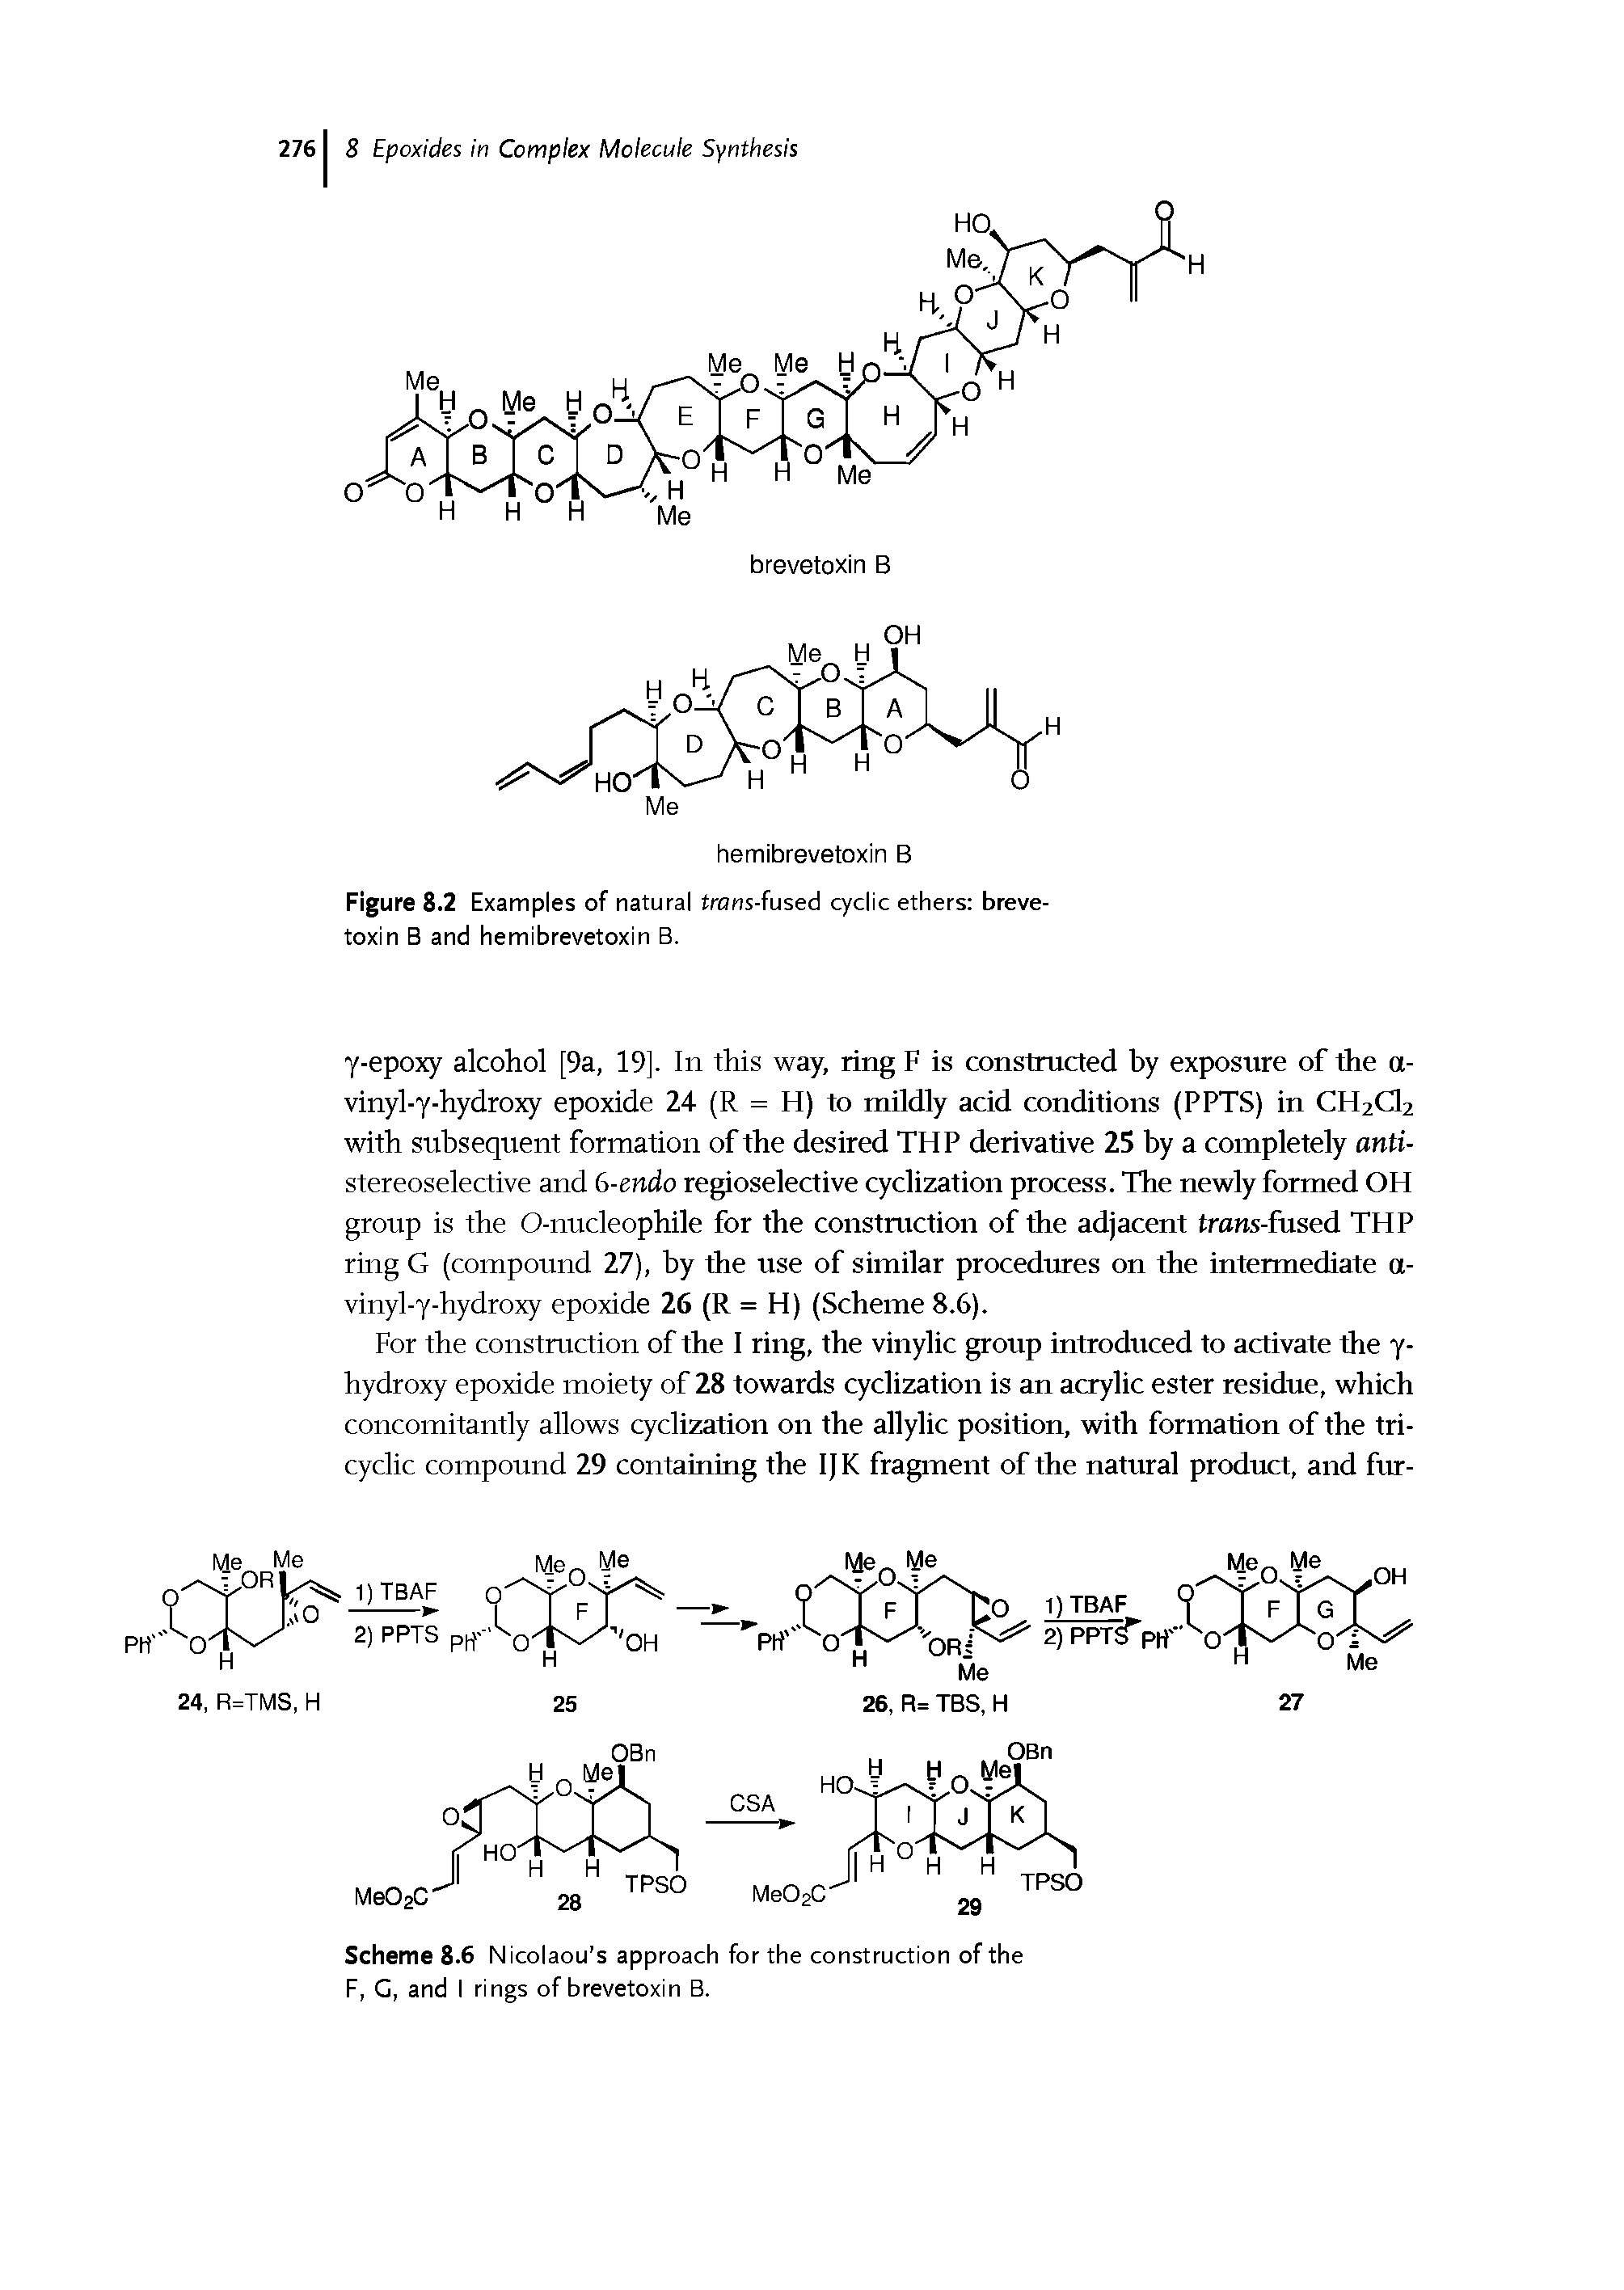 Figure 8.2 Examples of natural tram-fused cyclic ethers brevetoxin B and hemibrevetoxin B.